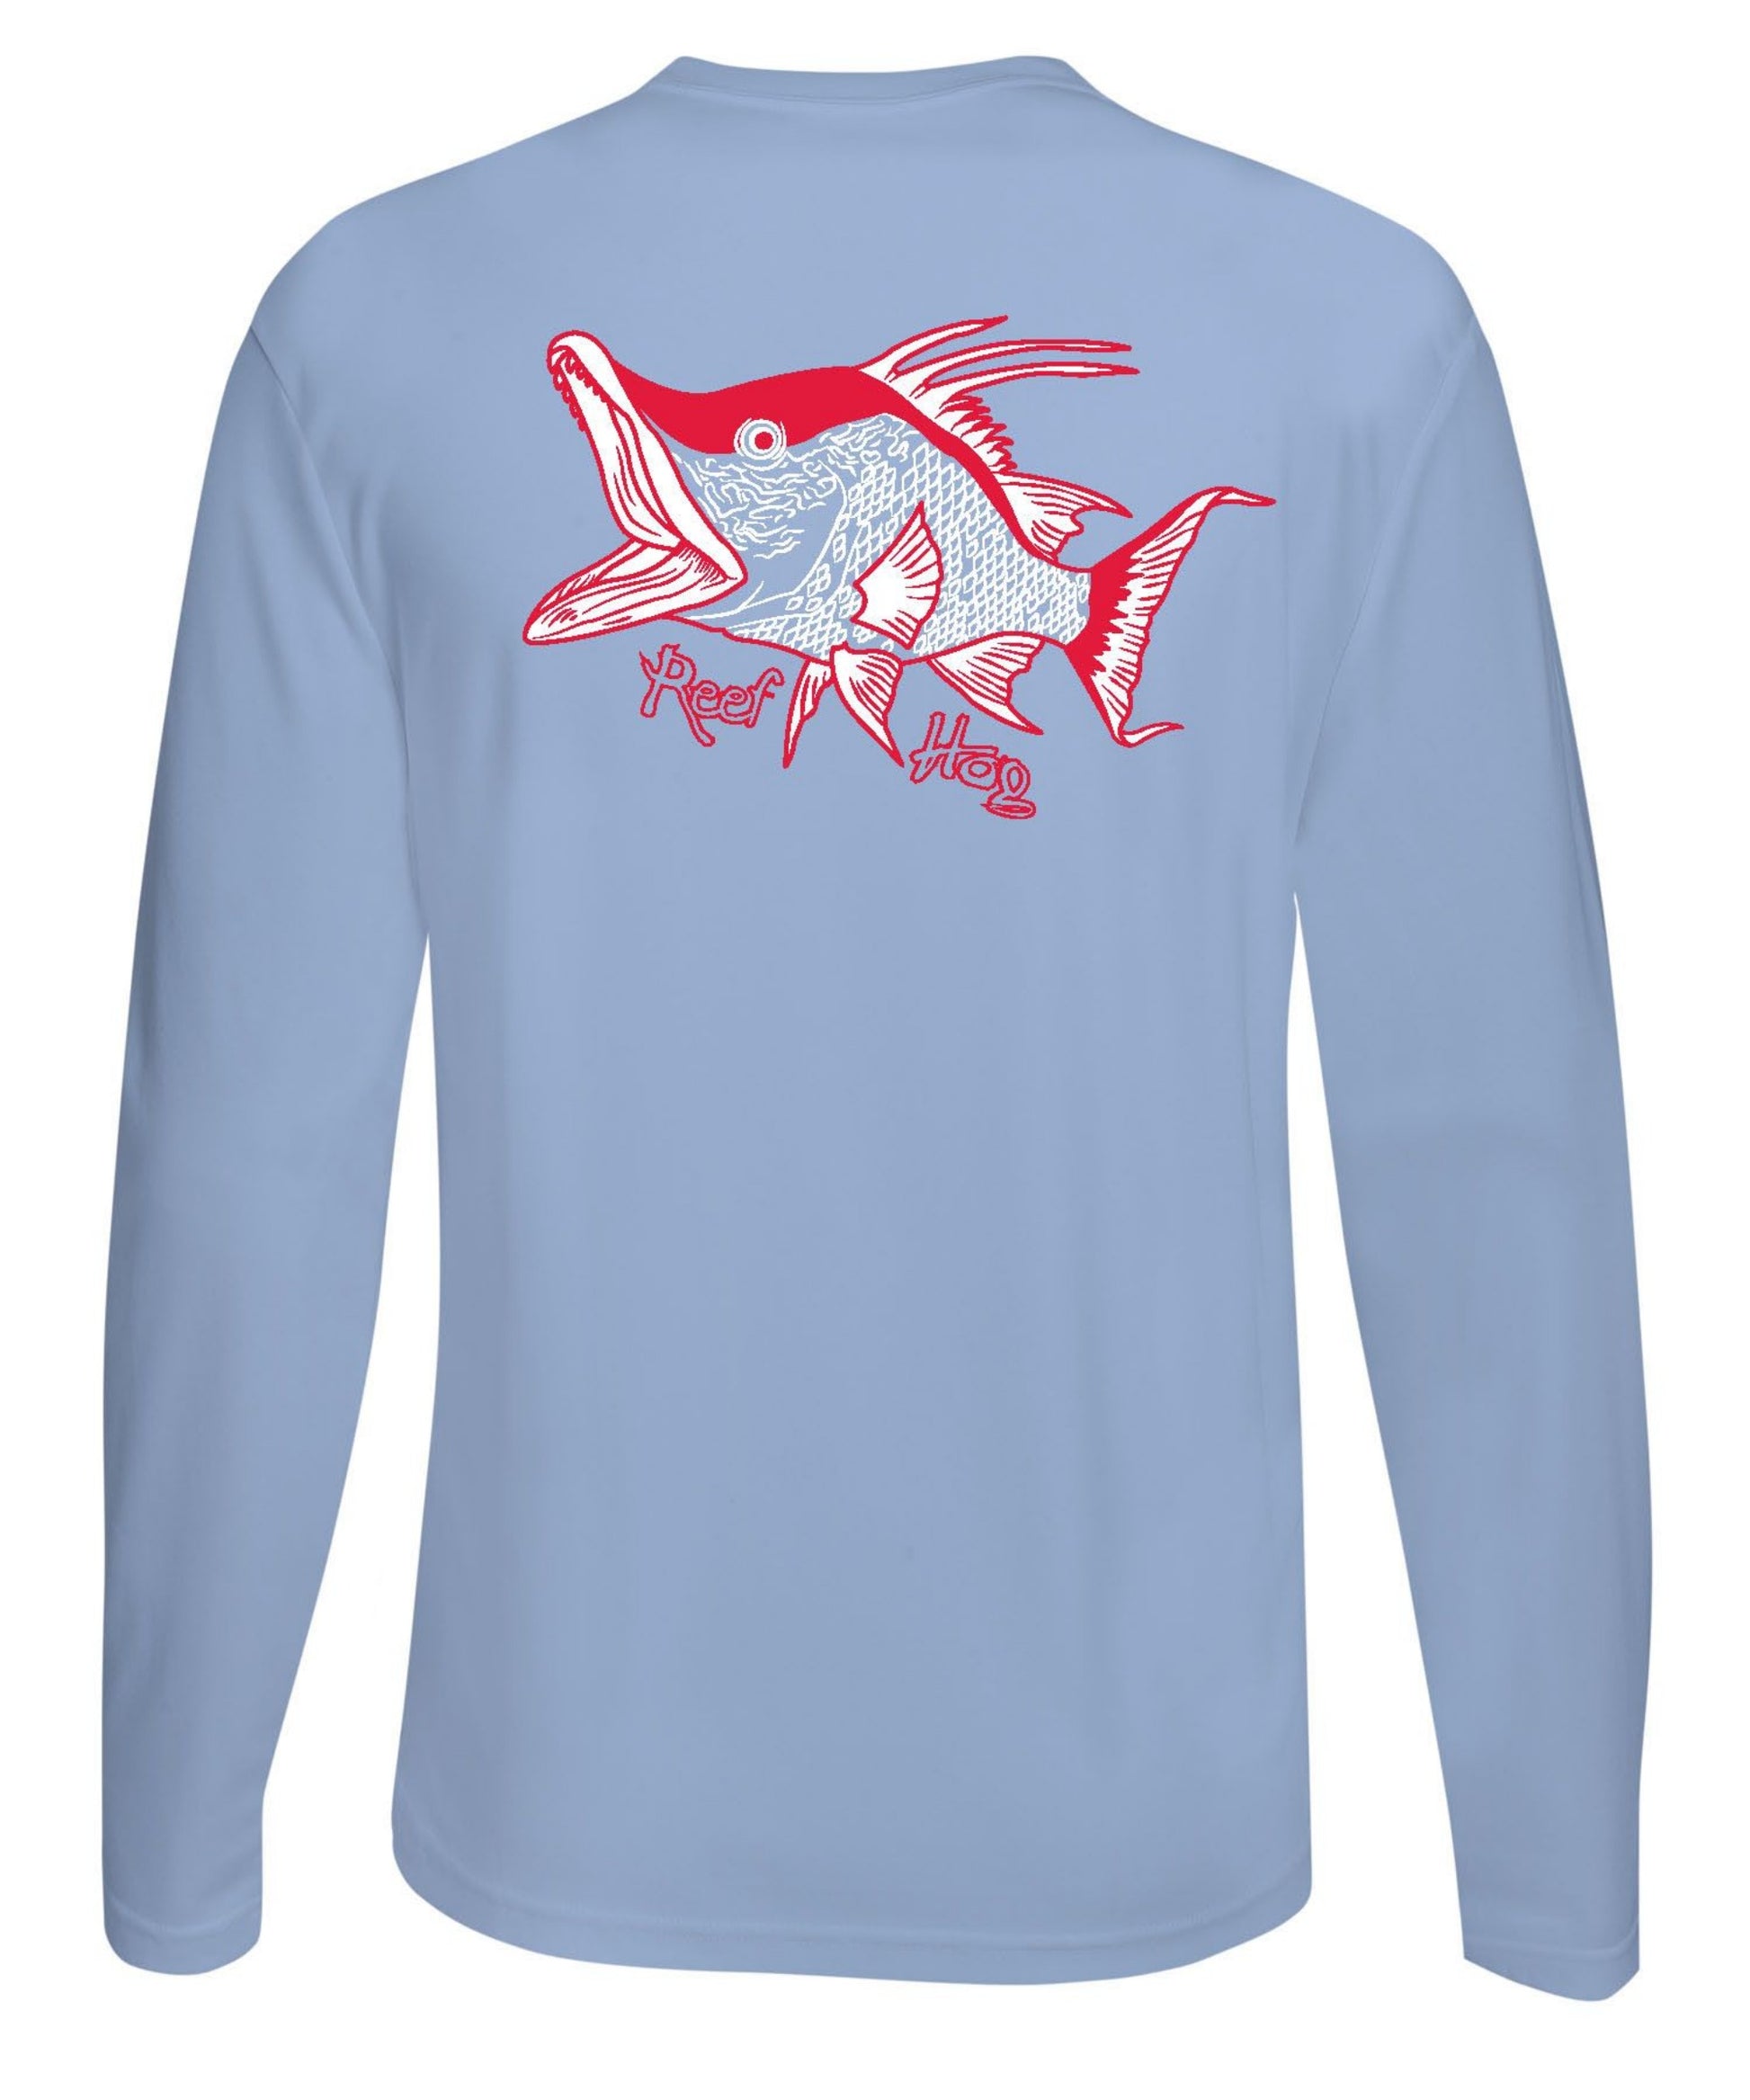 Hogfish Reef Hog Performance Dry-Fit Fishing 50+Upf Sun Shirts 2XL / Blue Mist Camo L/S - unisex